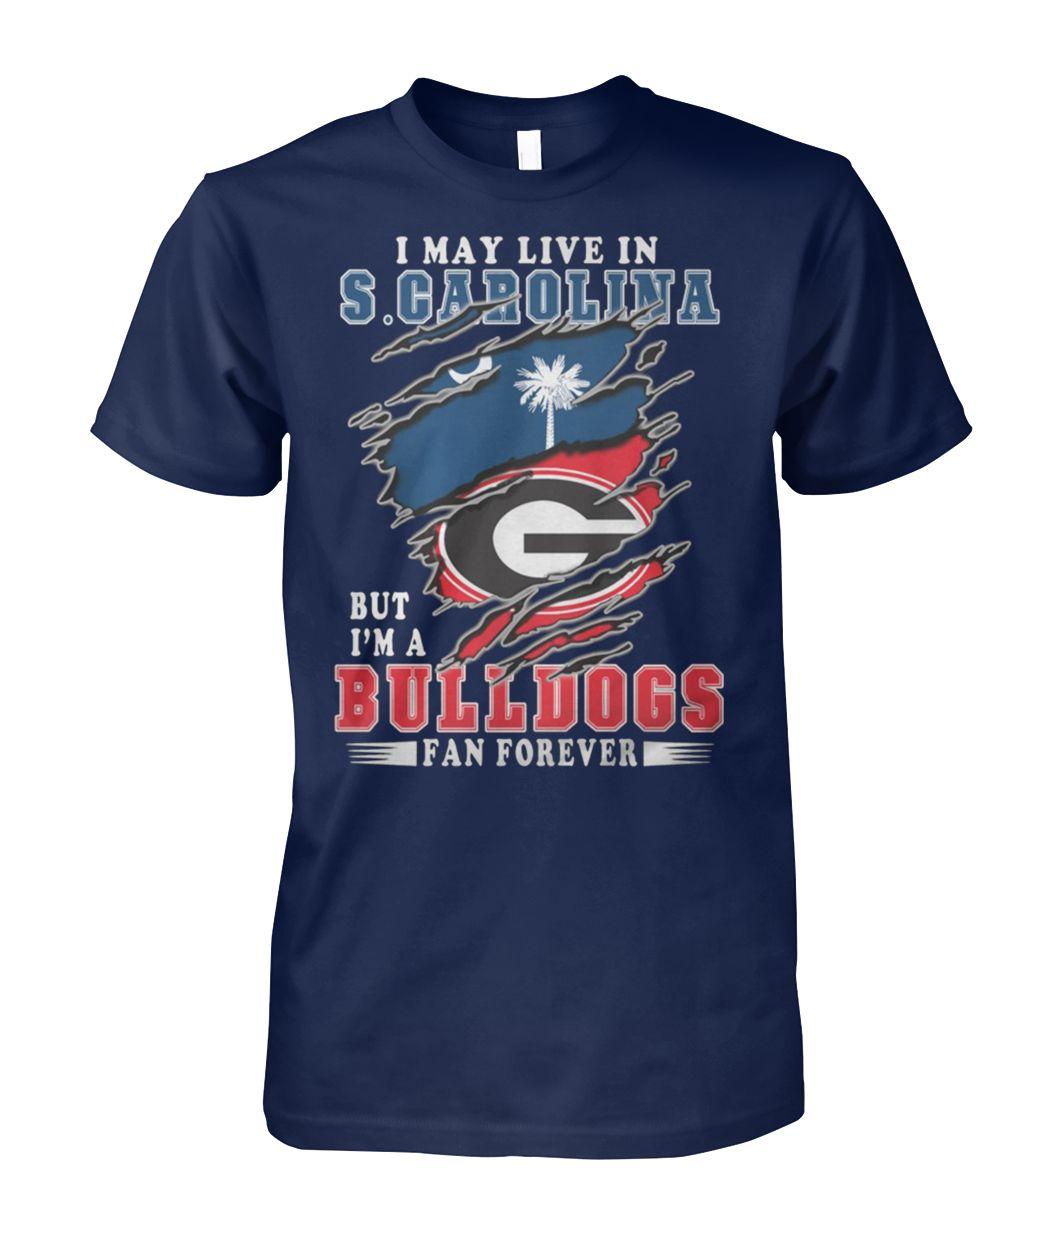 I may live in s.carolina but I’m a bulldogs fan forever georgia bulldogs shirt